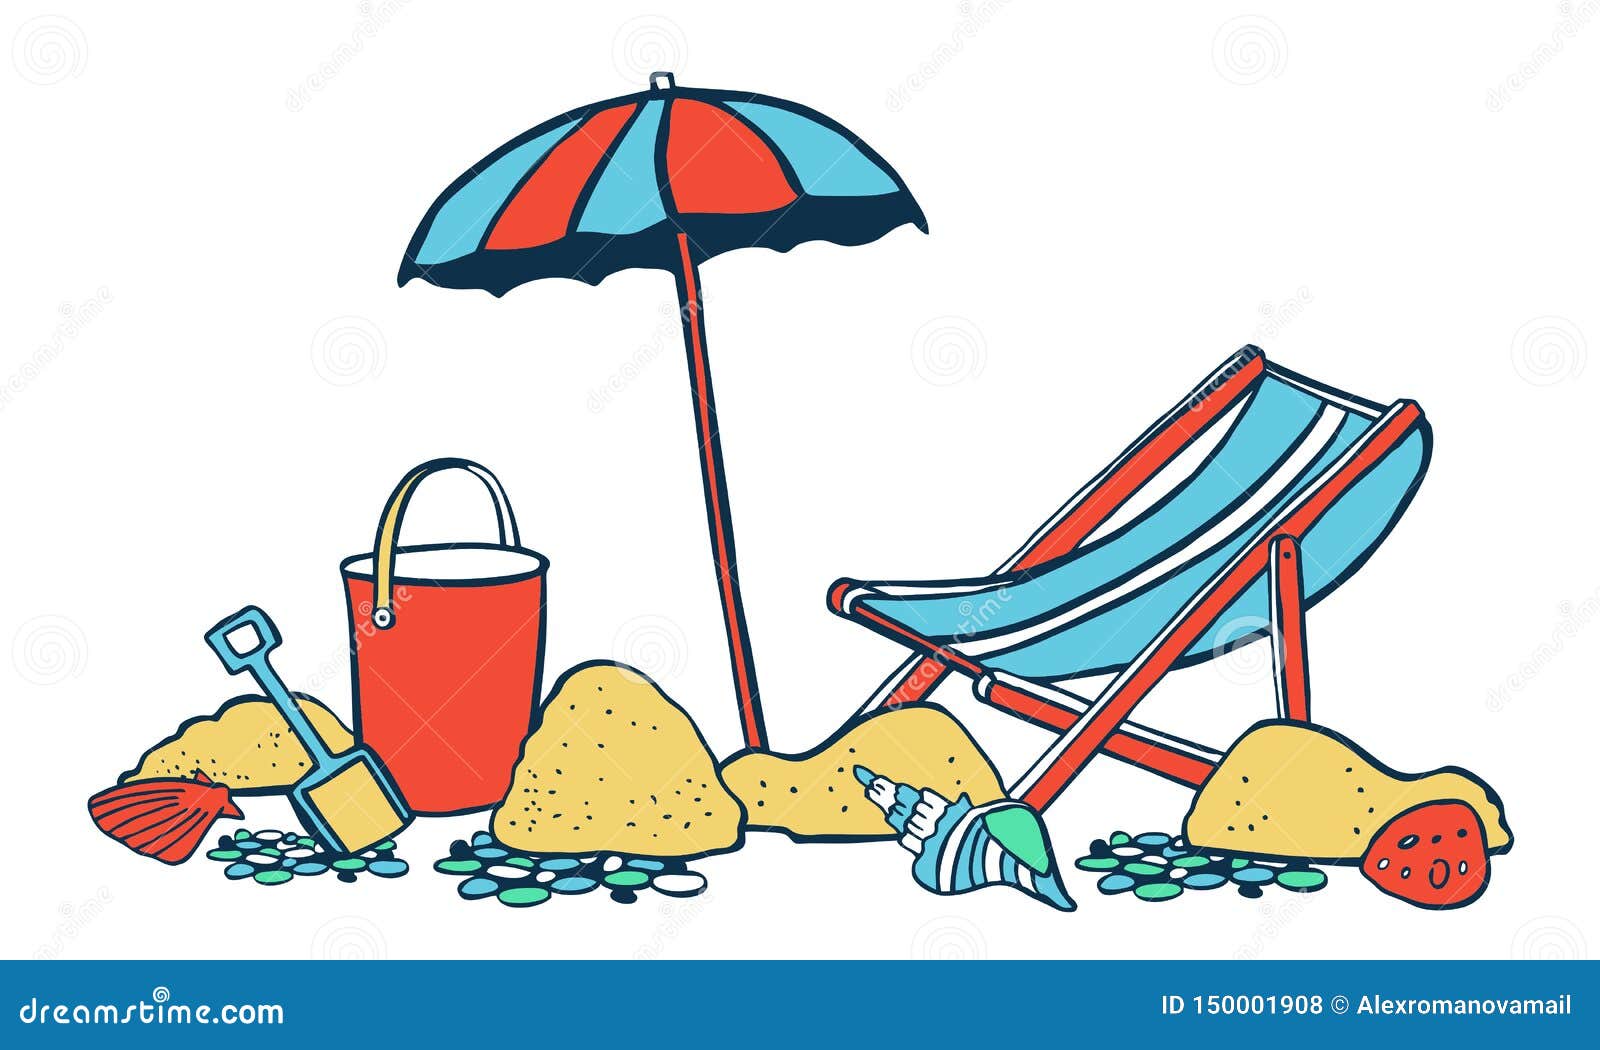 Kwadrant Jonge dame Misverstand Beach Scene. Parasol with Lounger on the Sand Stock Vector - Illustration  of cartoon, graphic: 150001908